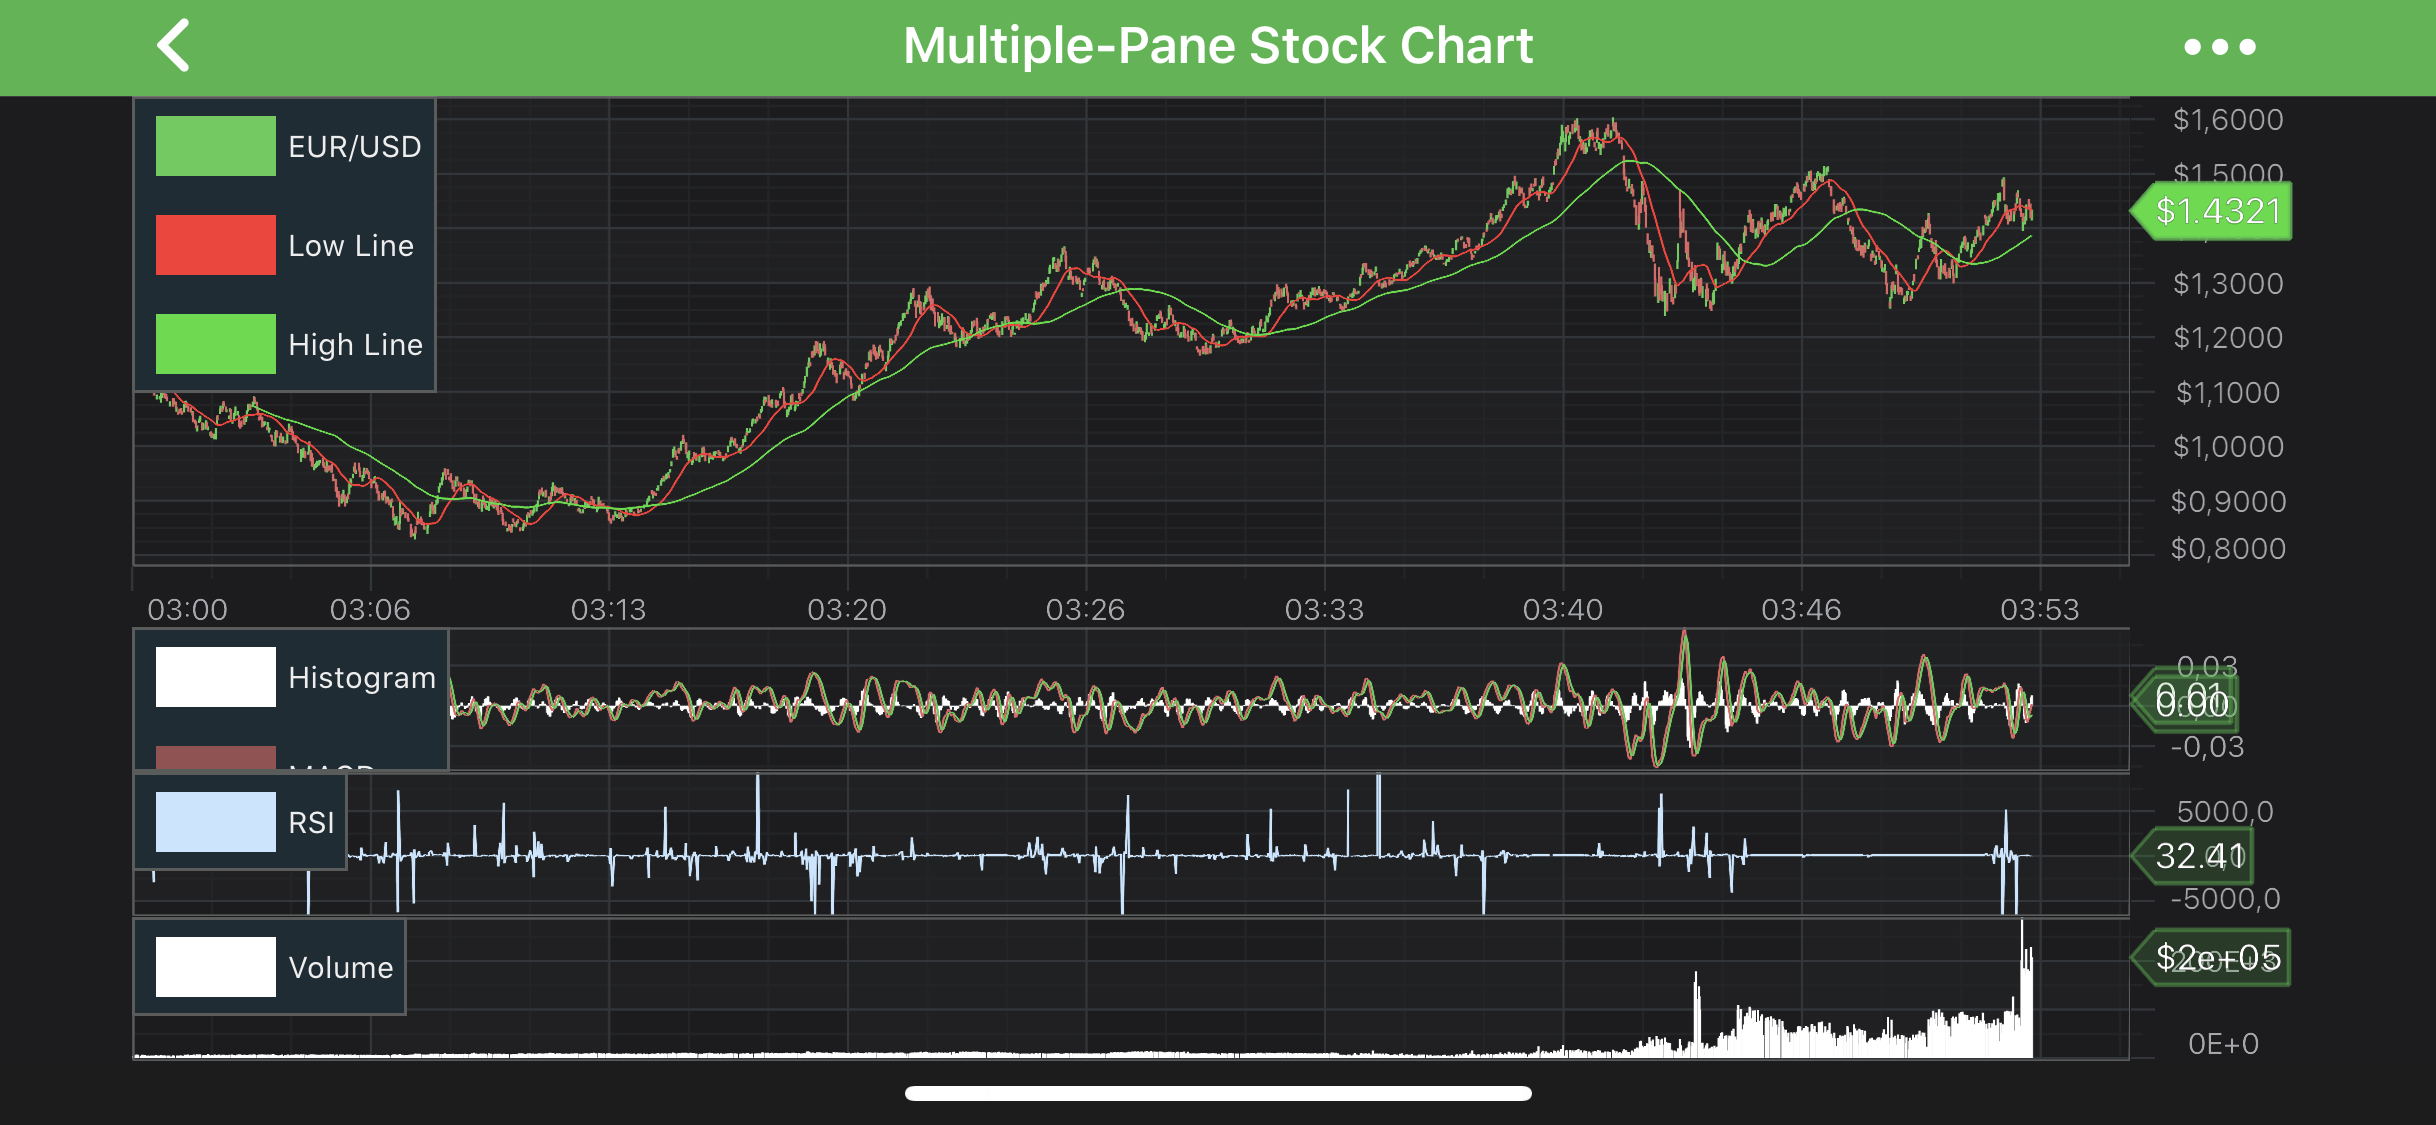 Multi-Pane Stock Chart